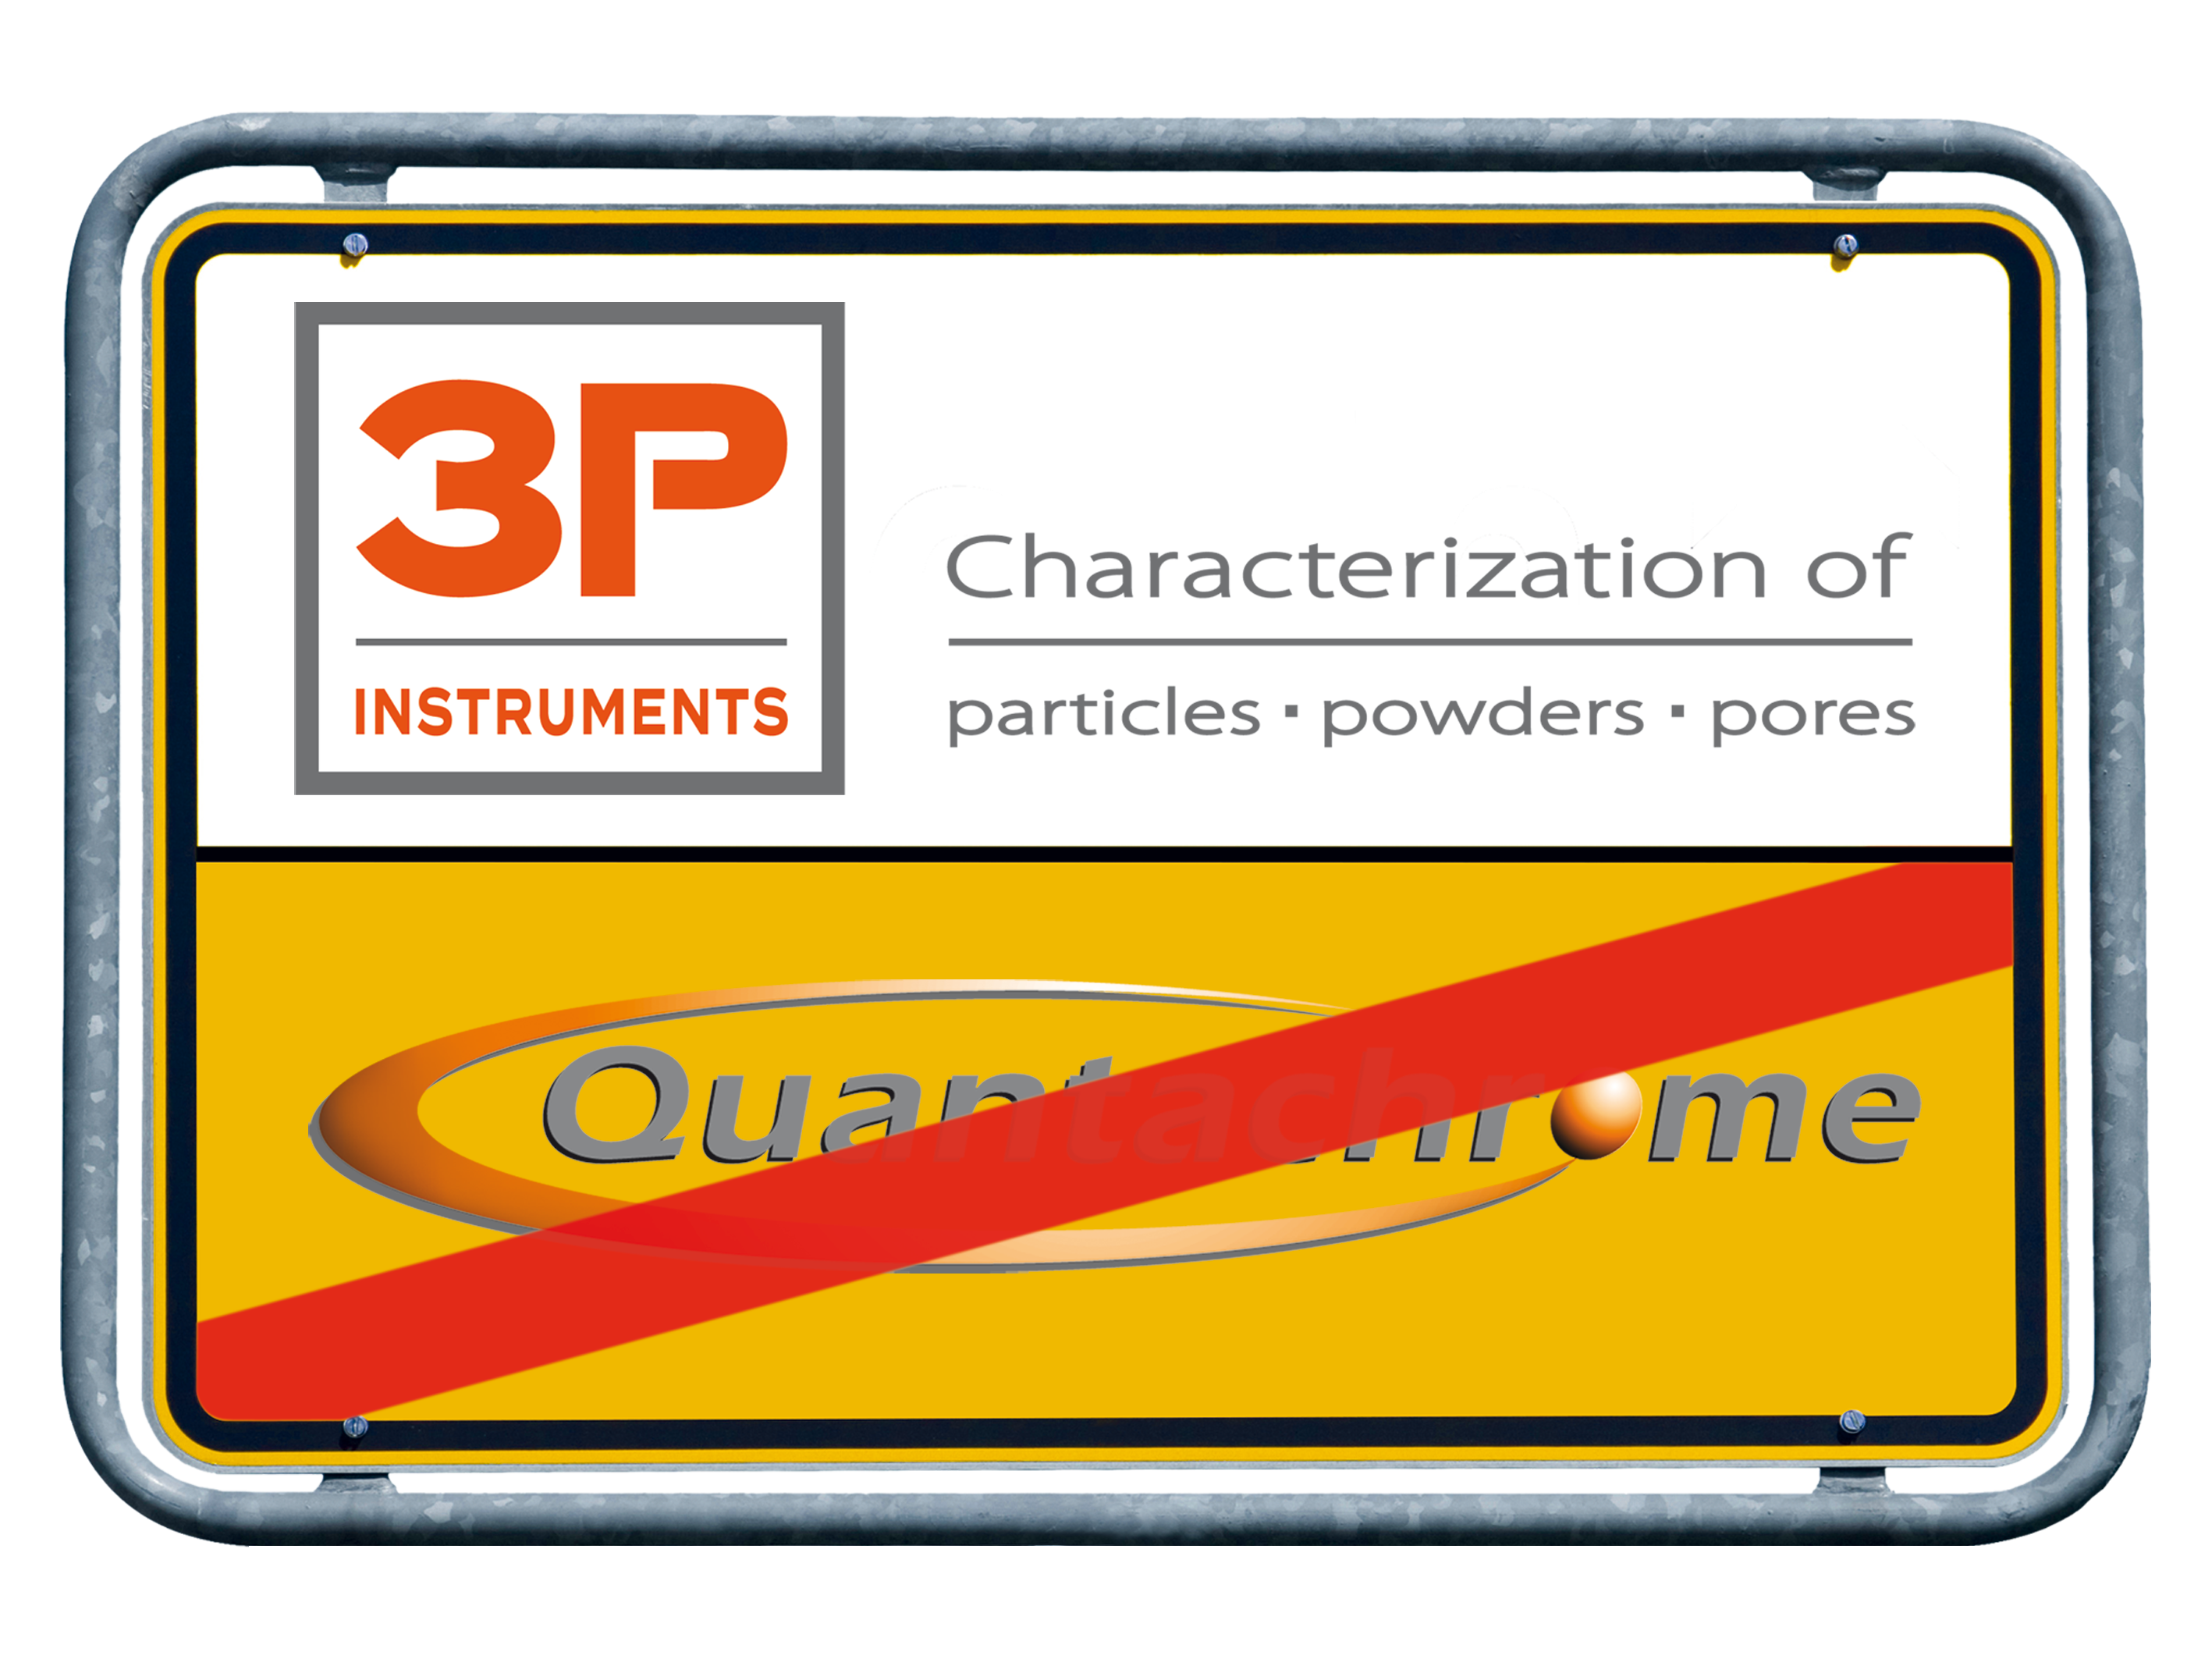 QUANTACHROME GmbH & Co. KG turns into 3P INSTRUMENTS